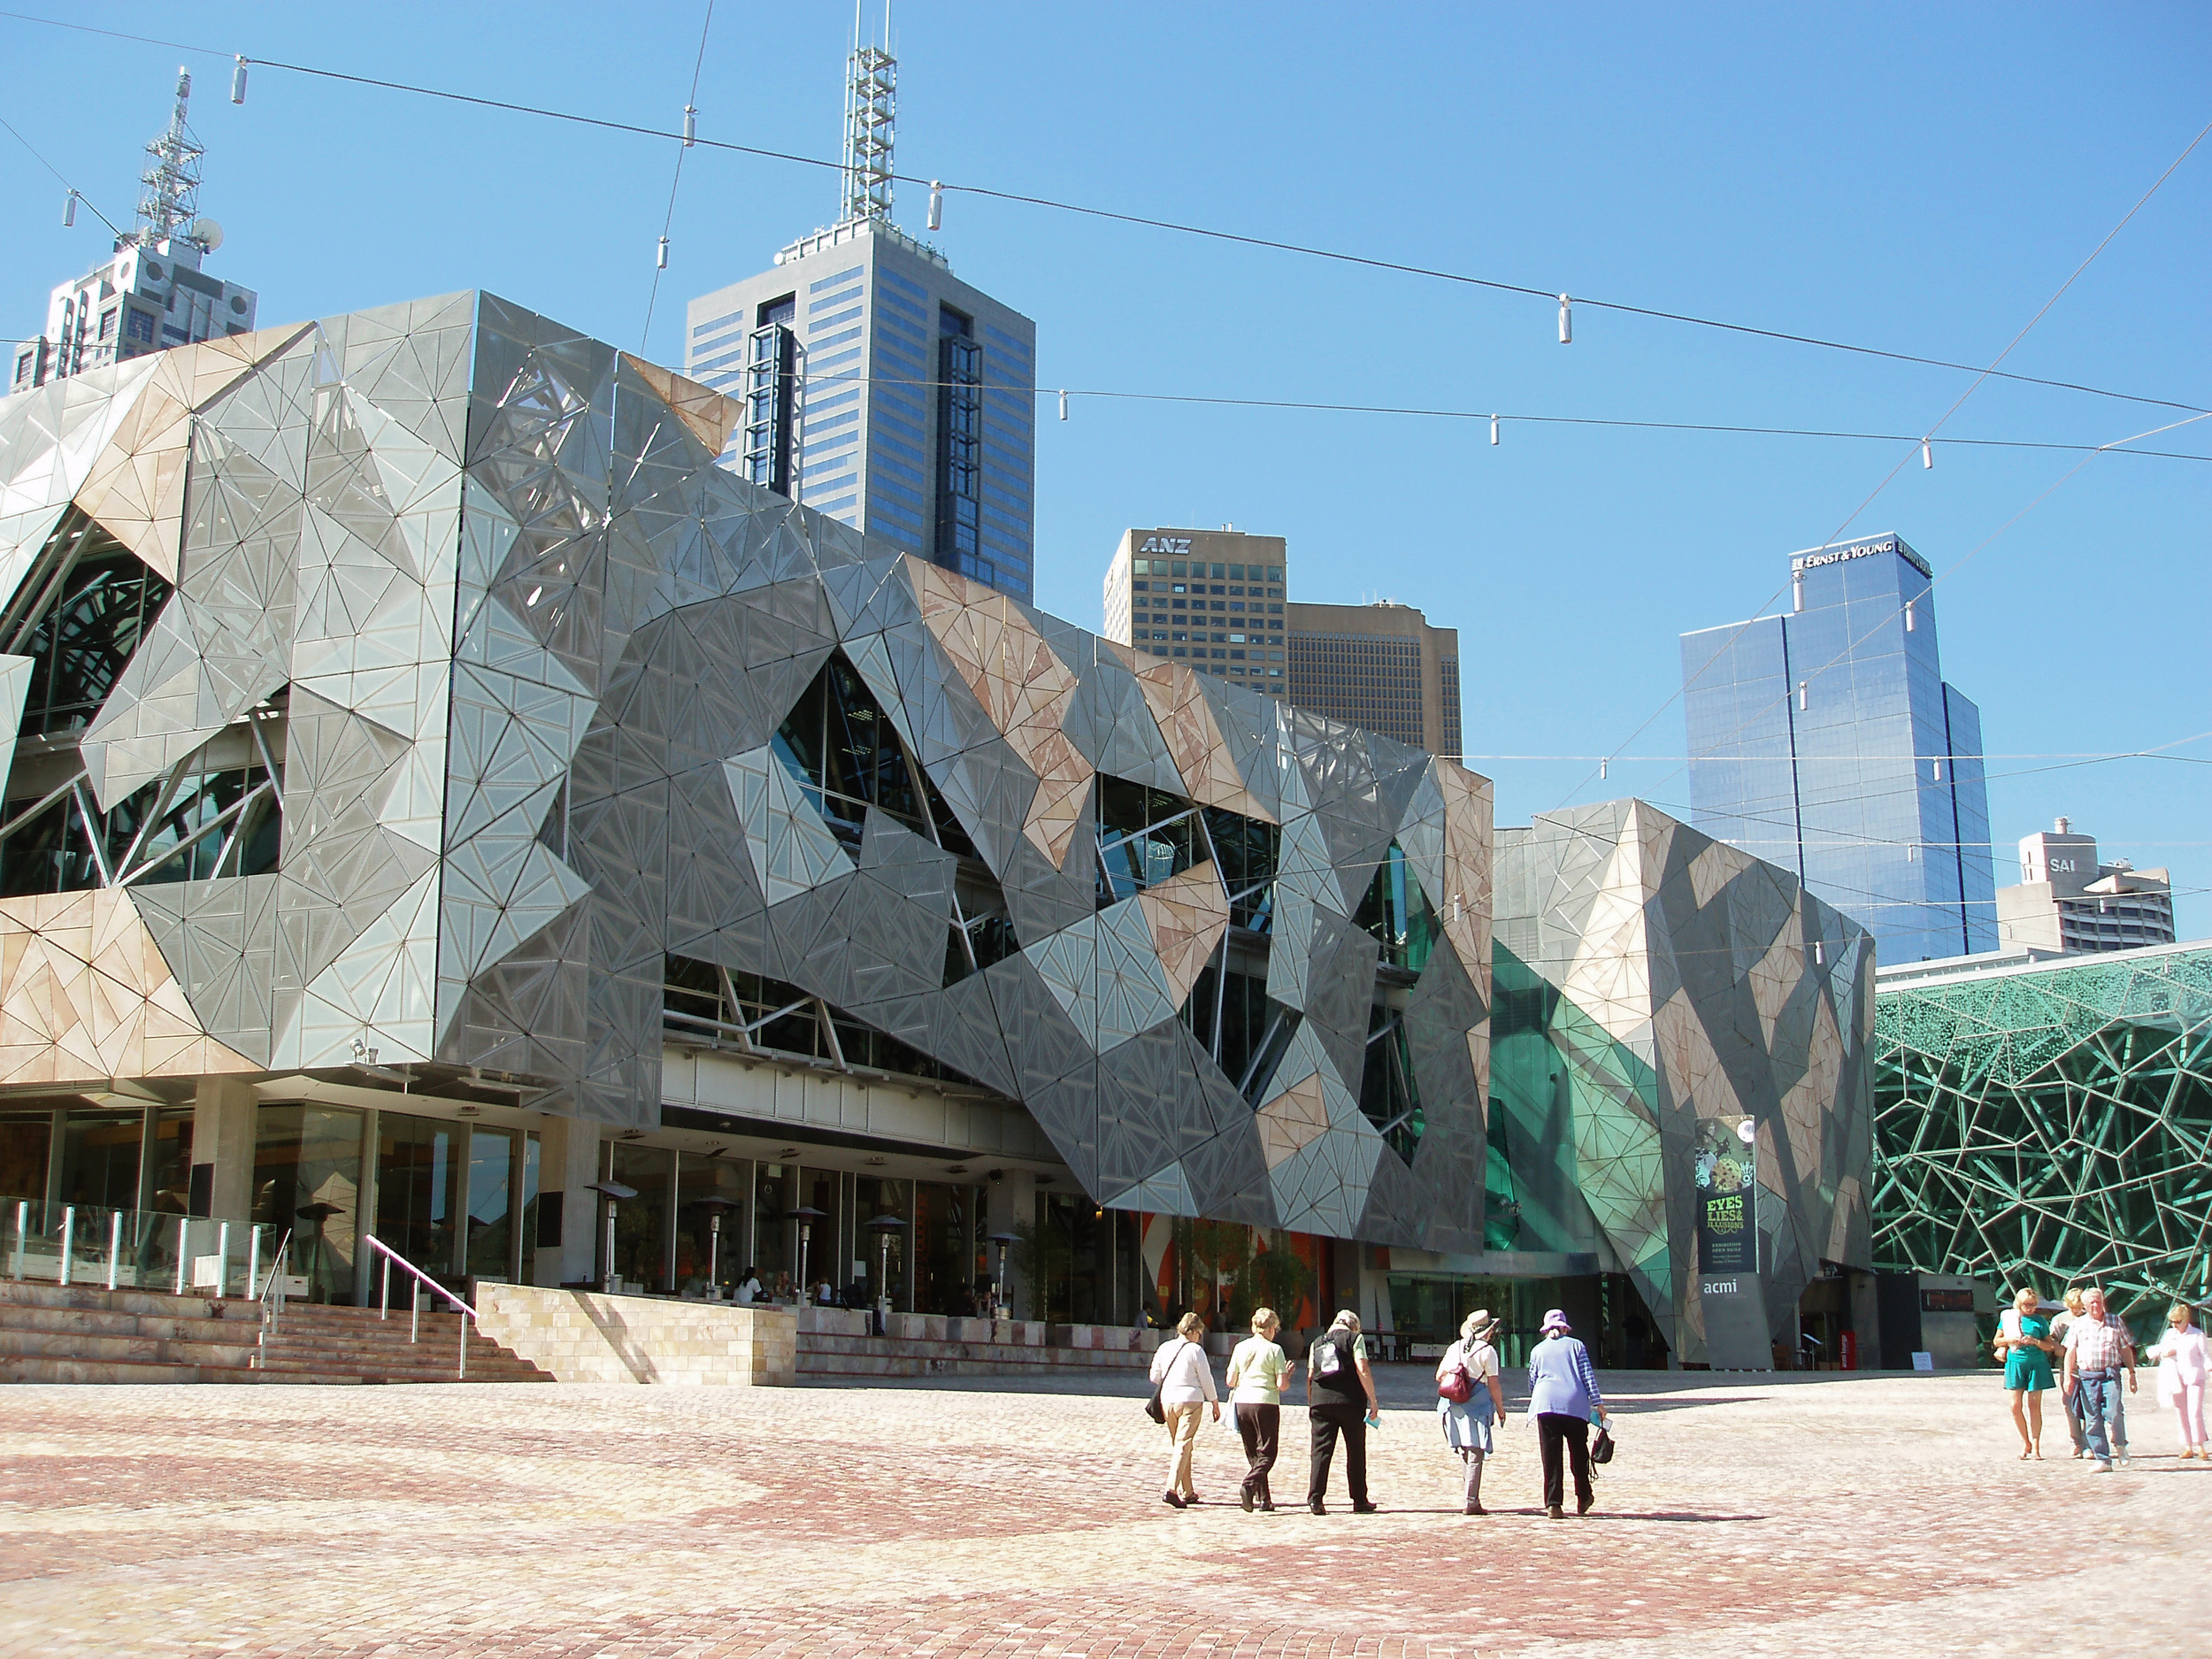 Federation Square Melbourne Australia Backgrounds on Wallpapers Vista